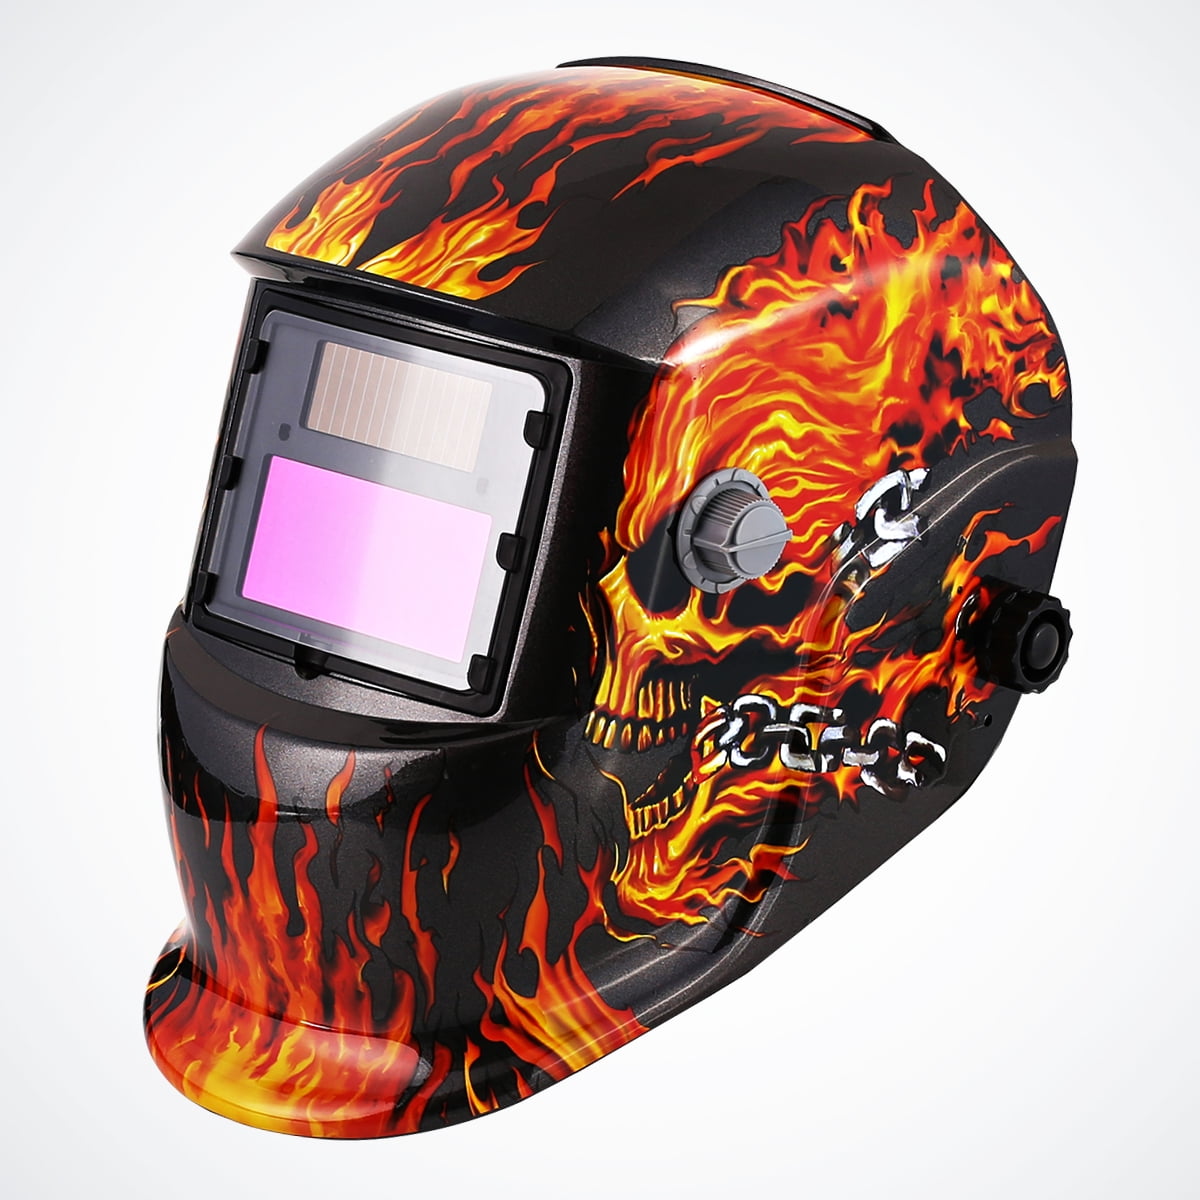 Auto Darkening Welding Helmet Tig Mig Arc Grinding Solar Powered New Mask